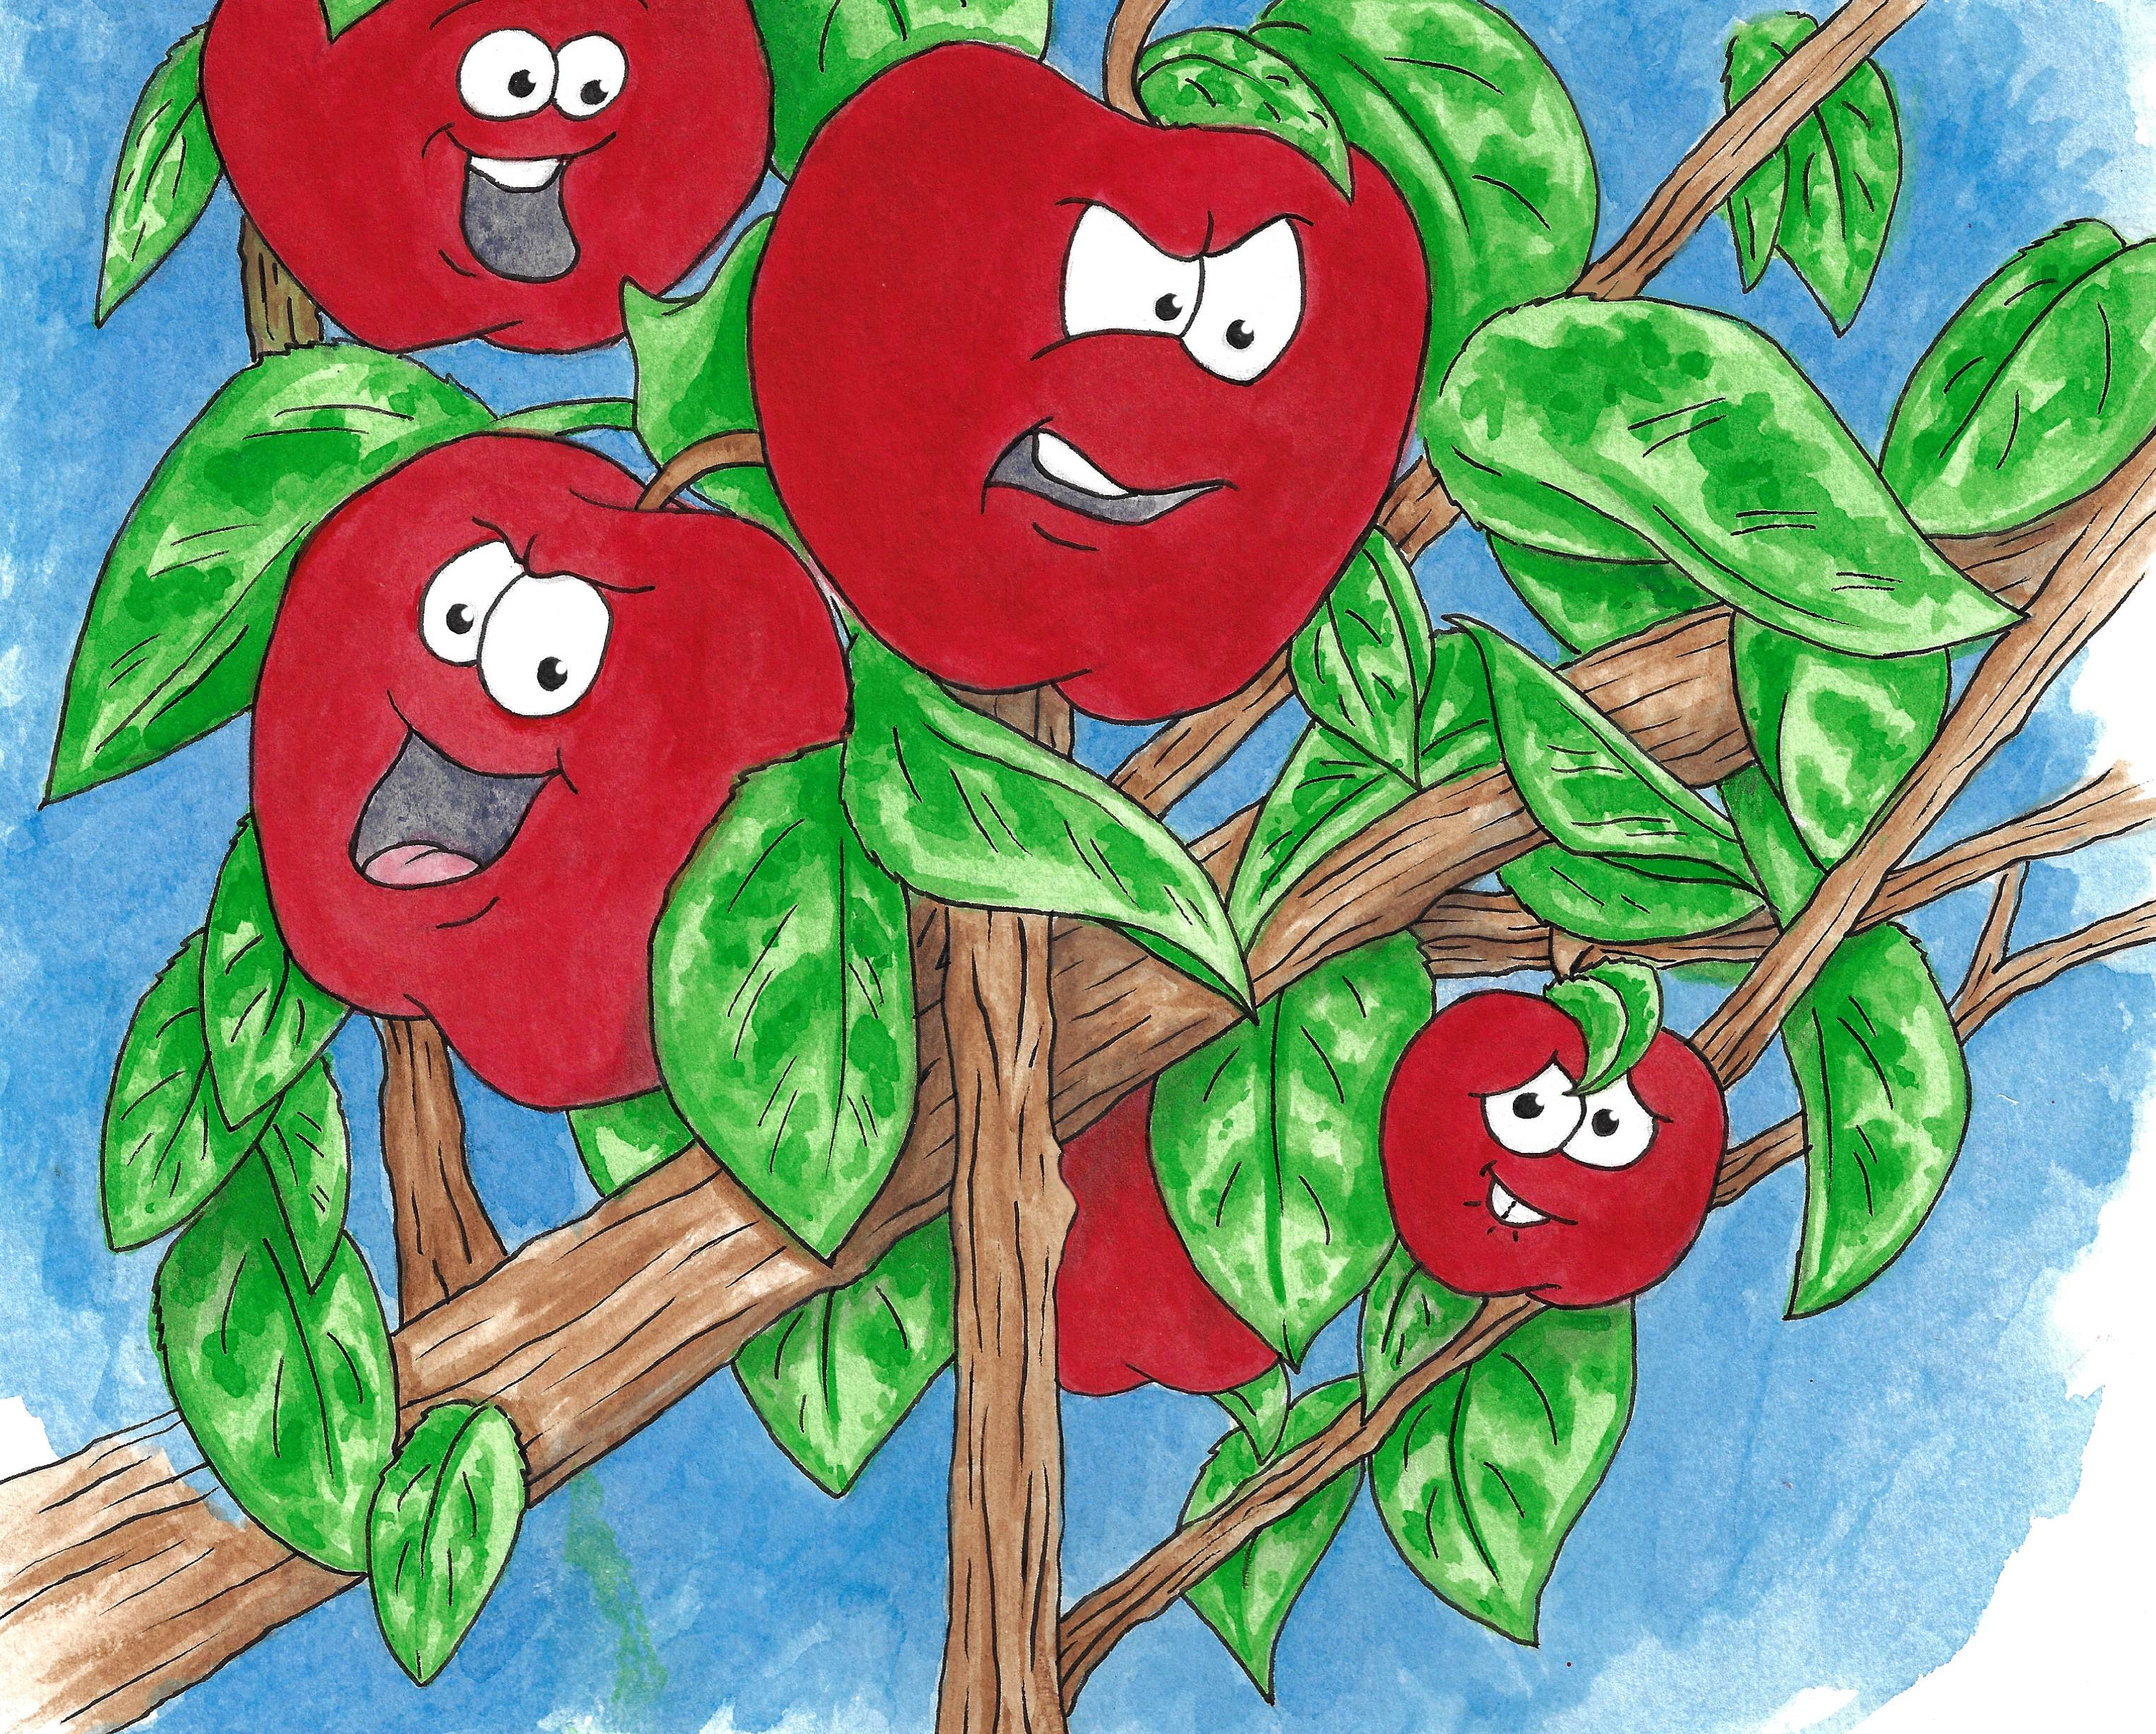 Mean apples. "Juicy John" illustration